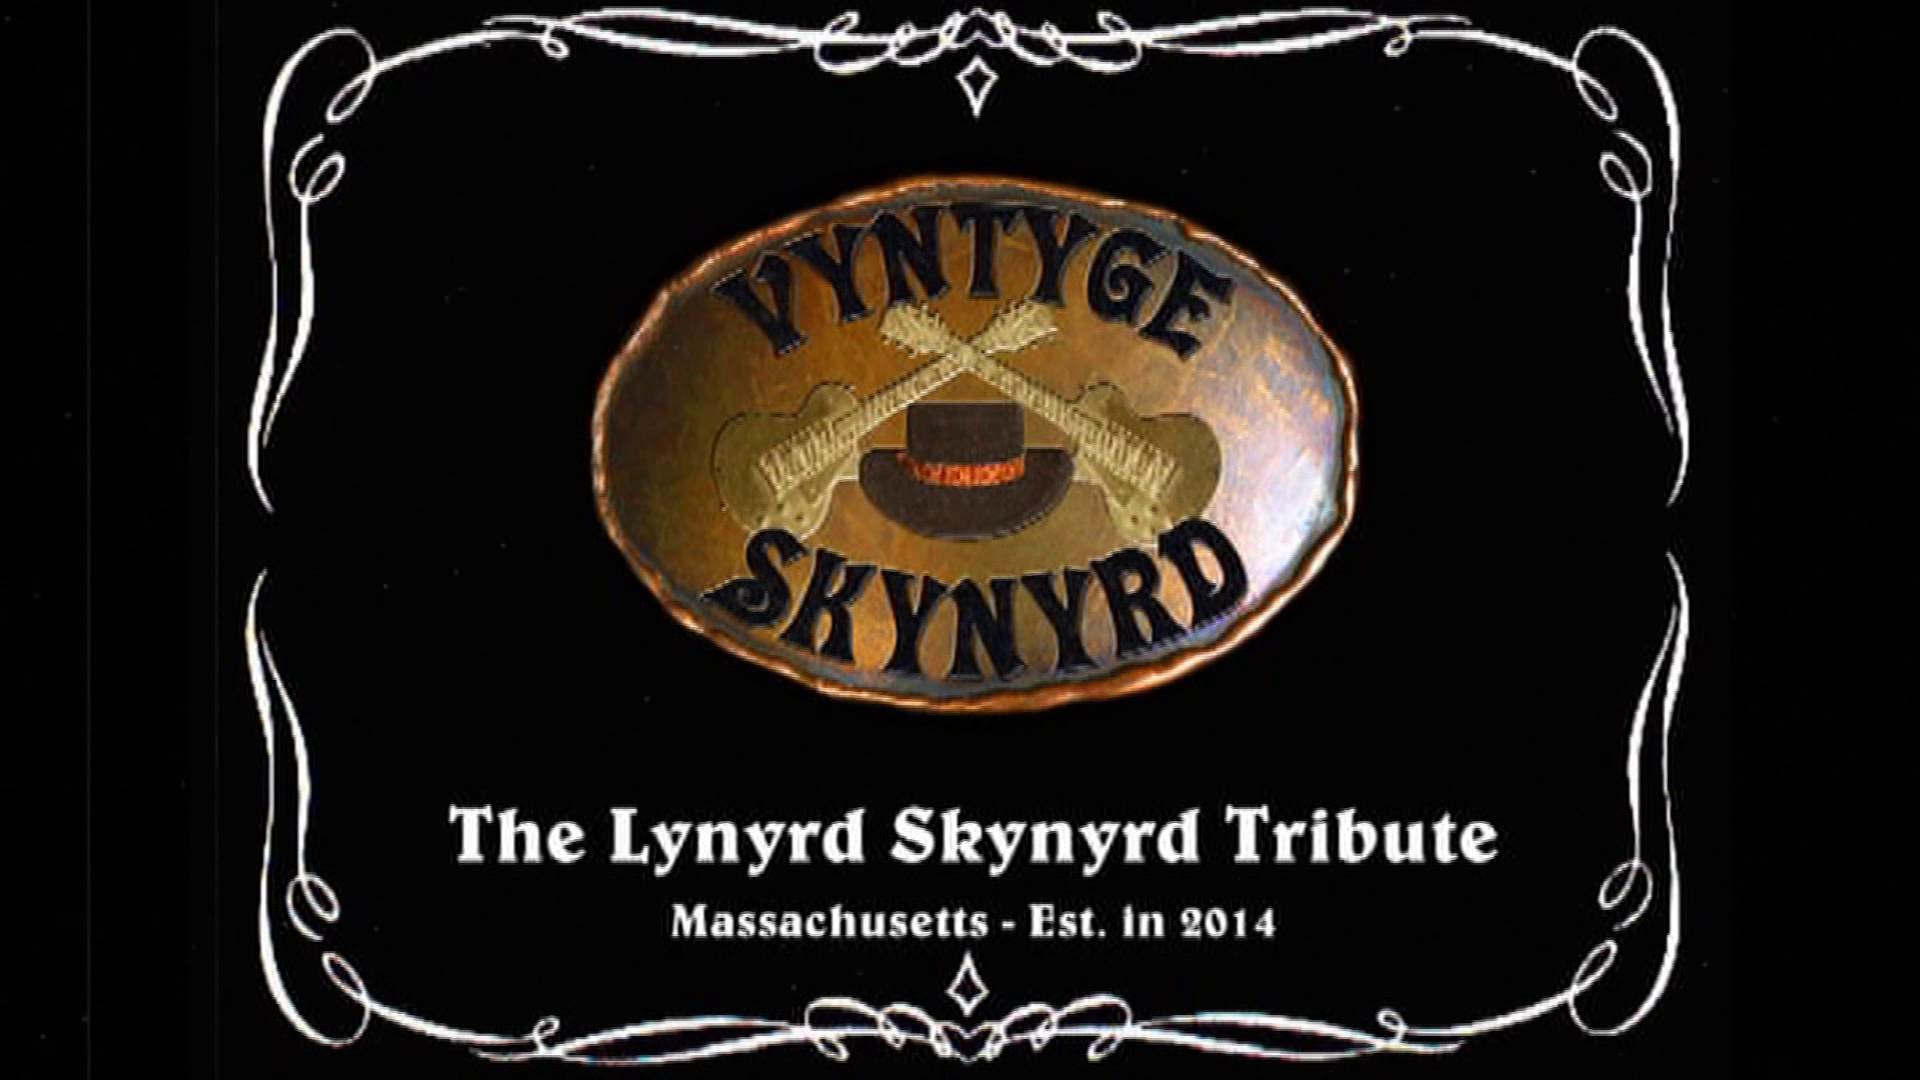 1920x1080 VYNTYGE SKYNYRD (Lynyrd Skynyrd Tribute): Promo / EPK 2015 (v2)